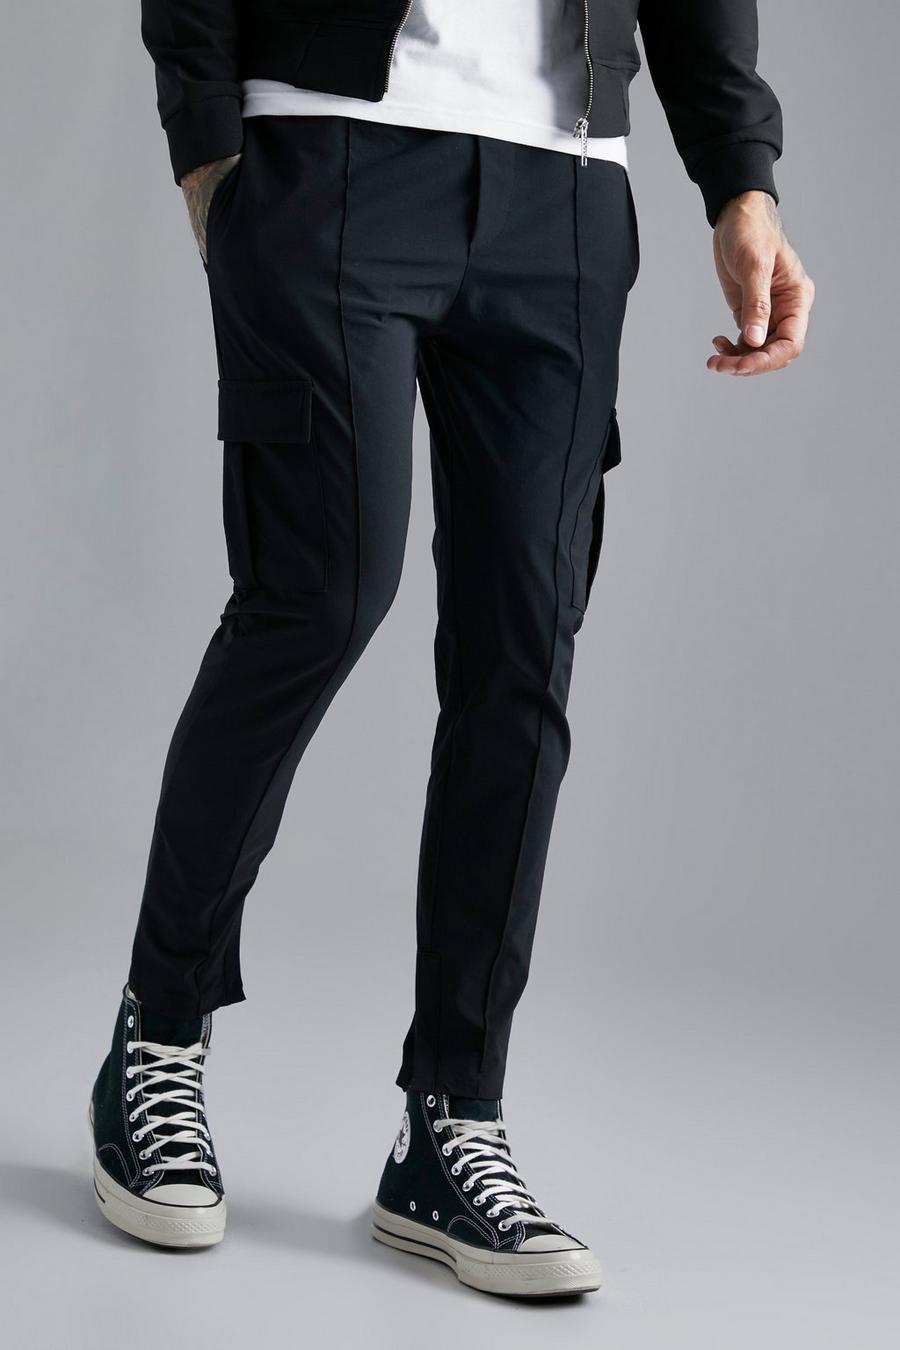 Pantaloni Cargo Slim Fit in Stretch tecnico, Black nero